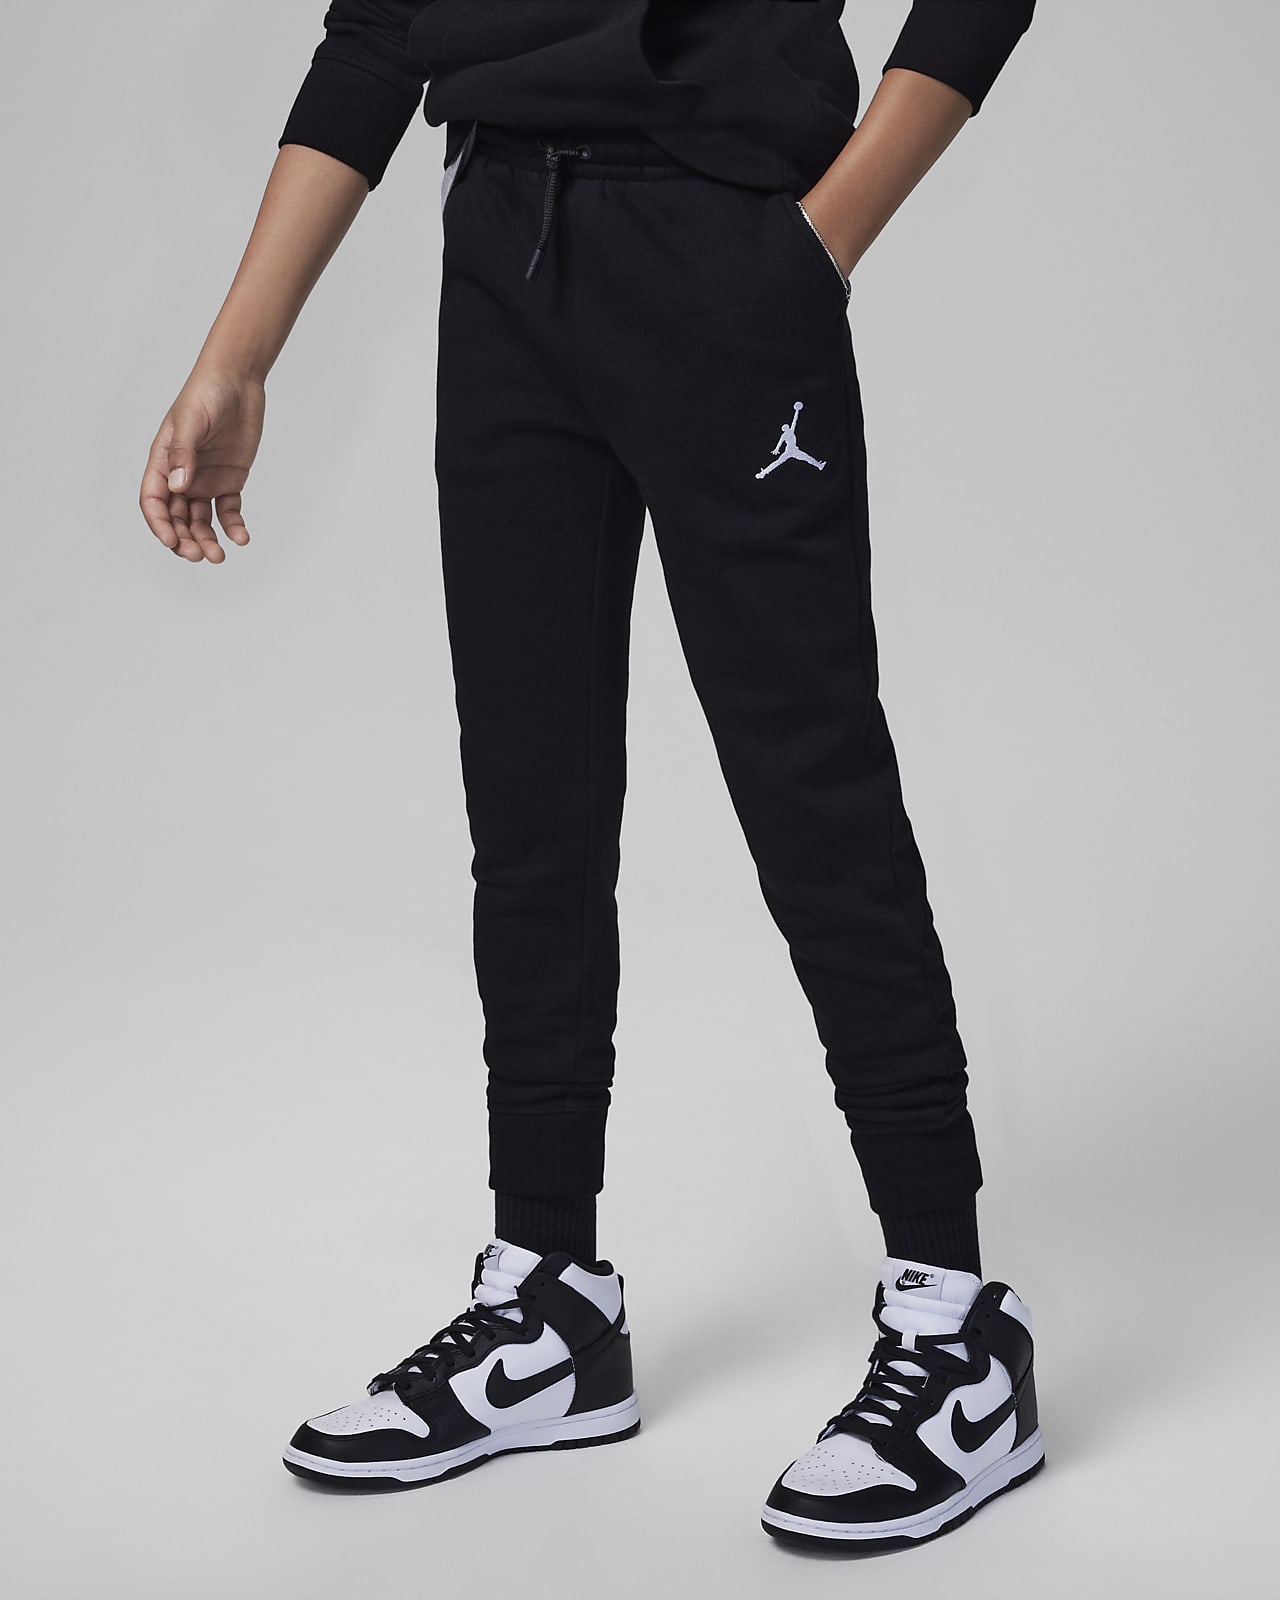 Jordan MJ Essentials Pants Hose für ältere Kinder